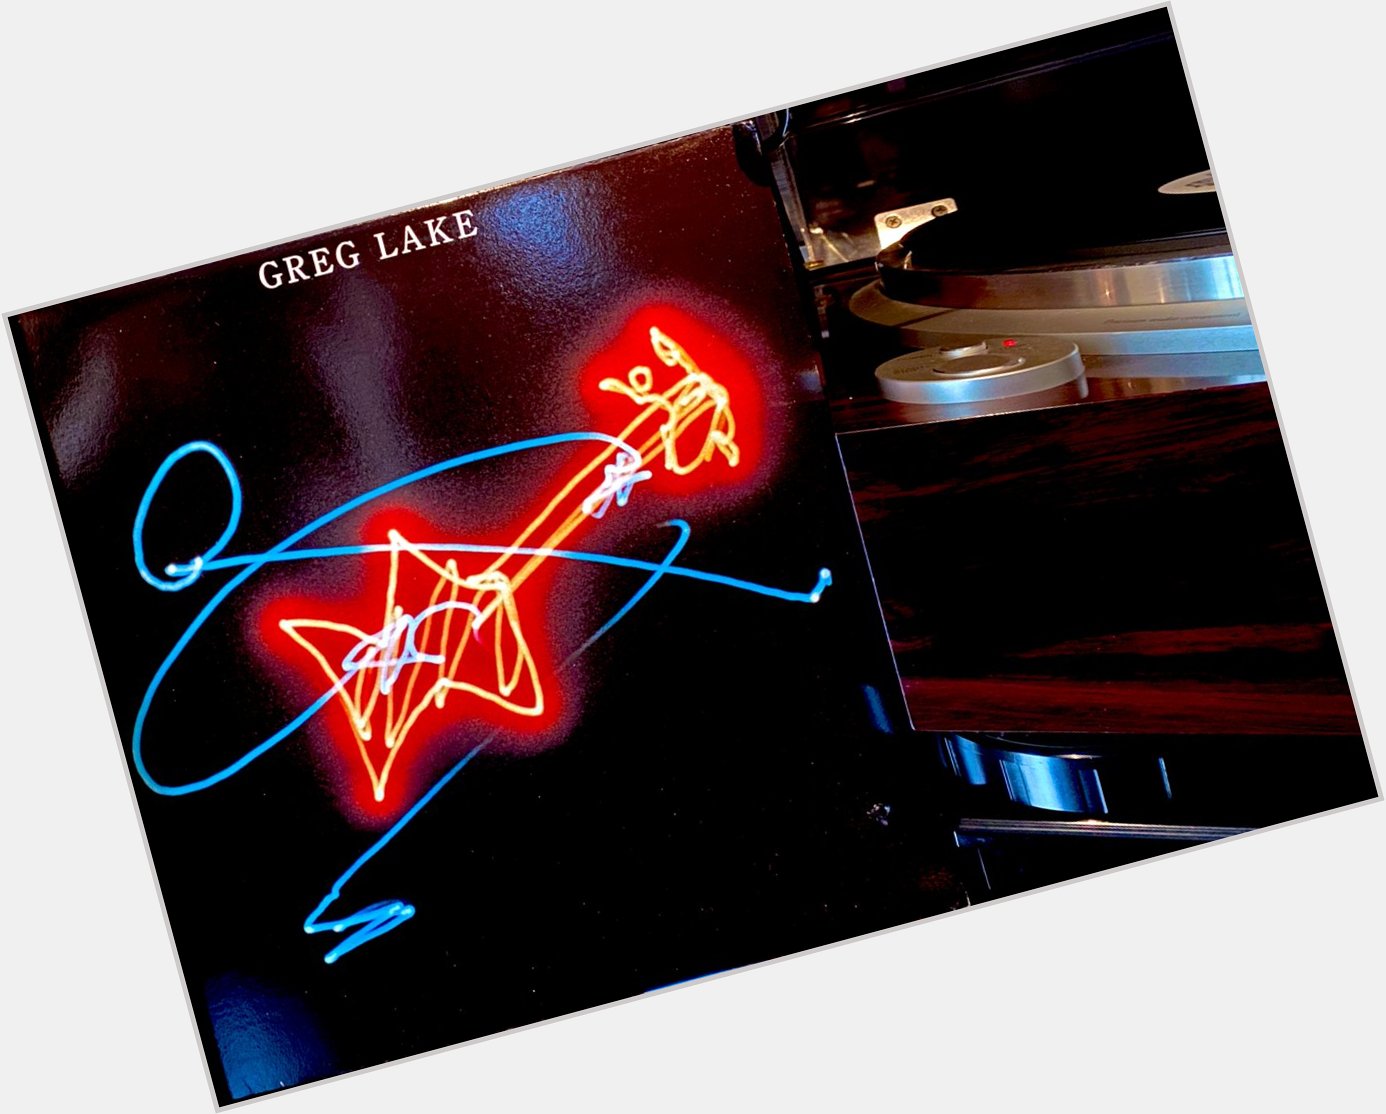 Now spinning at Skylab: 

Greg Lake - s/t (1981) - happy heavenly birthday Greg!   